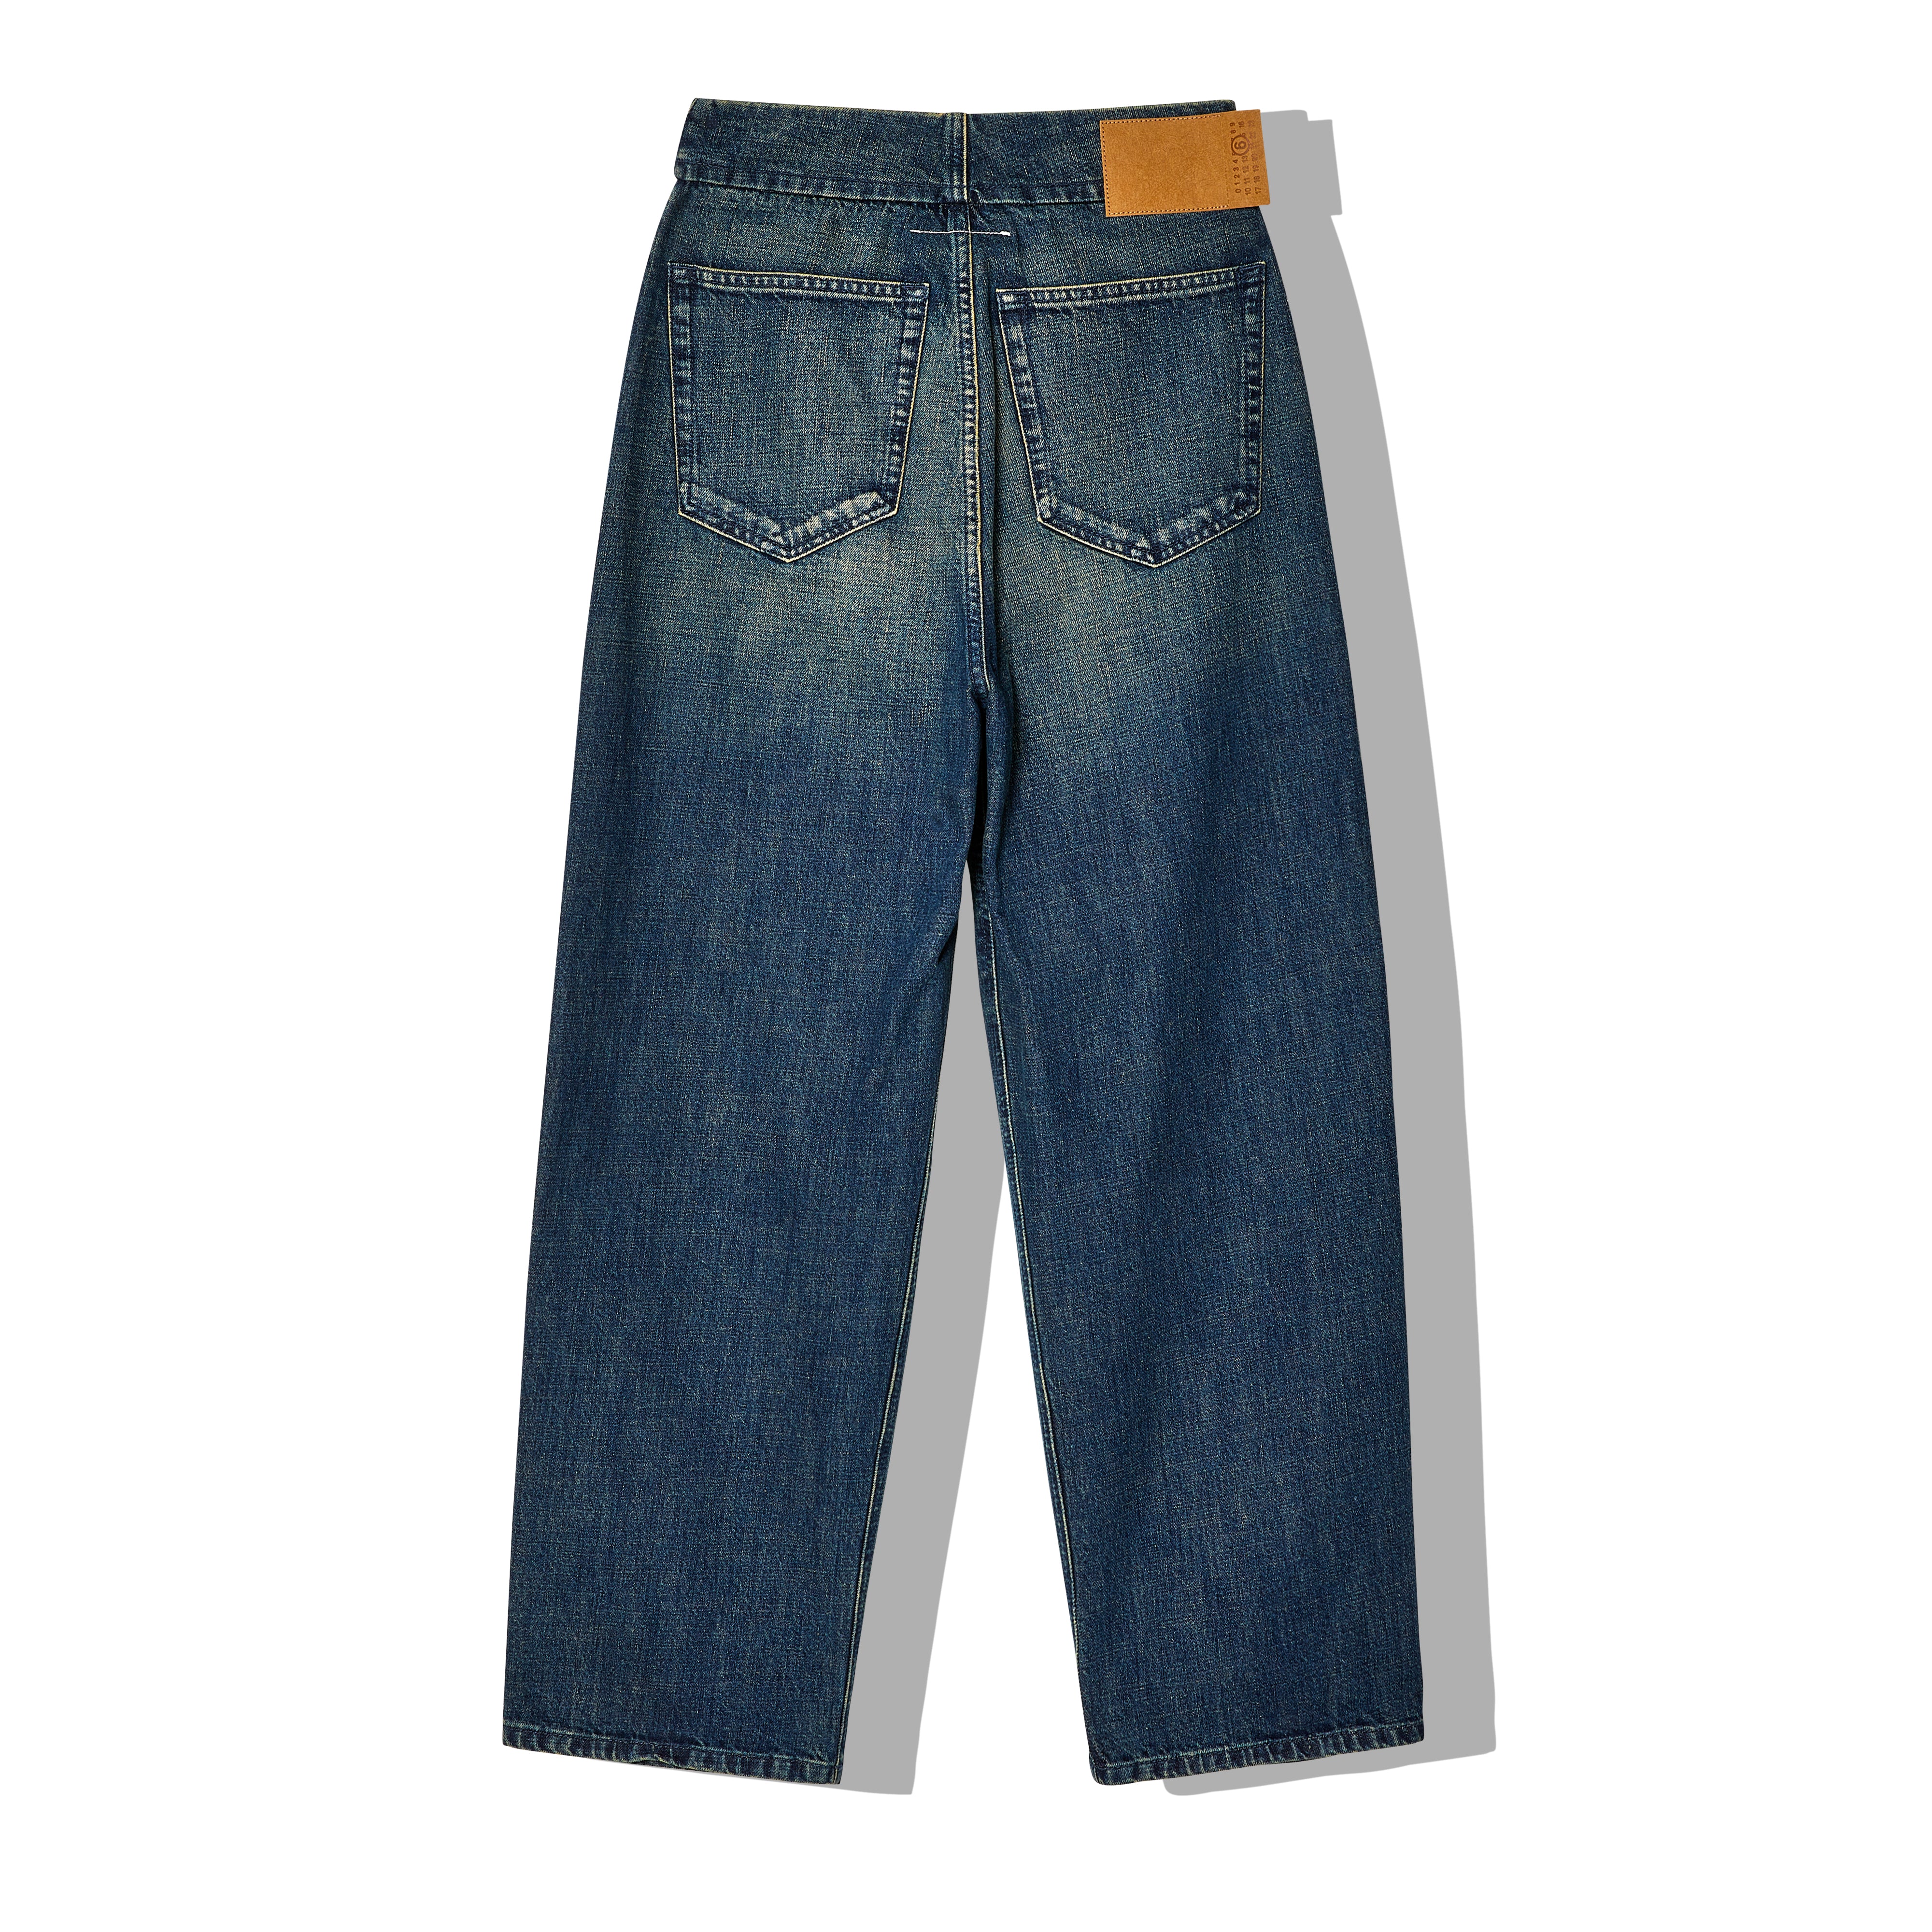 MM6 Maison Margiela - Women's 5 Pocket Jeans - (Blue)